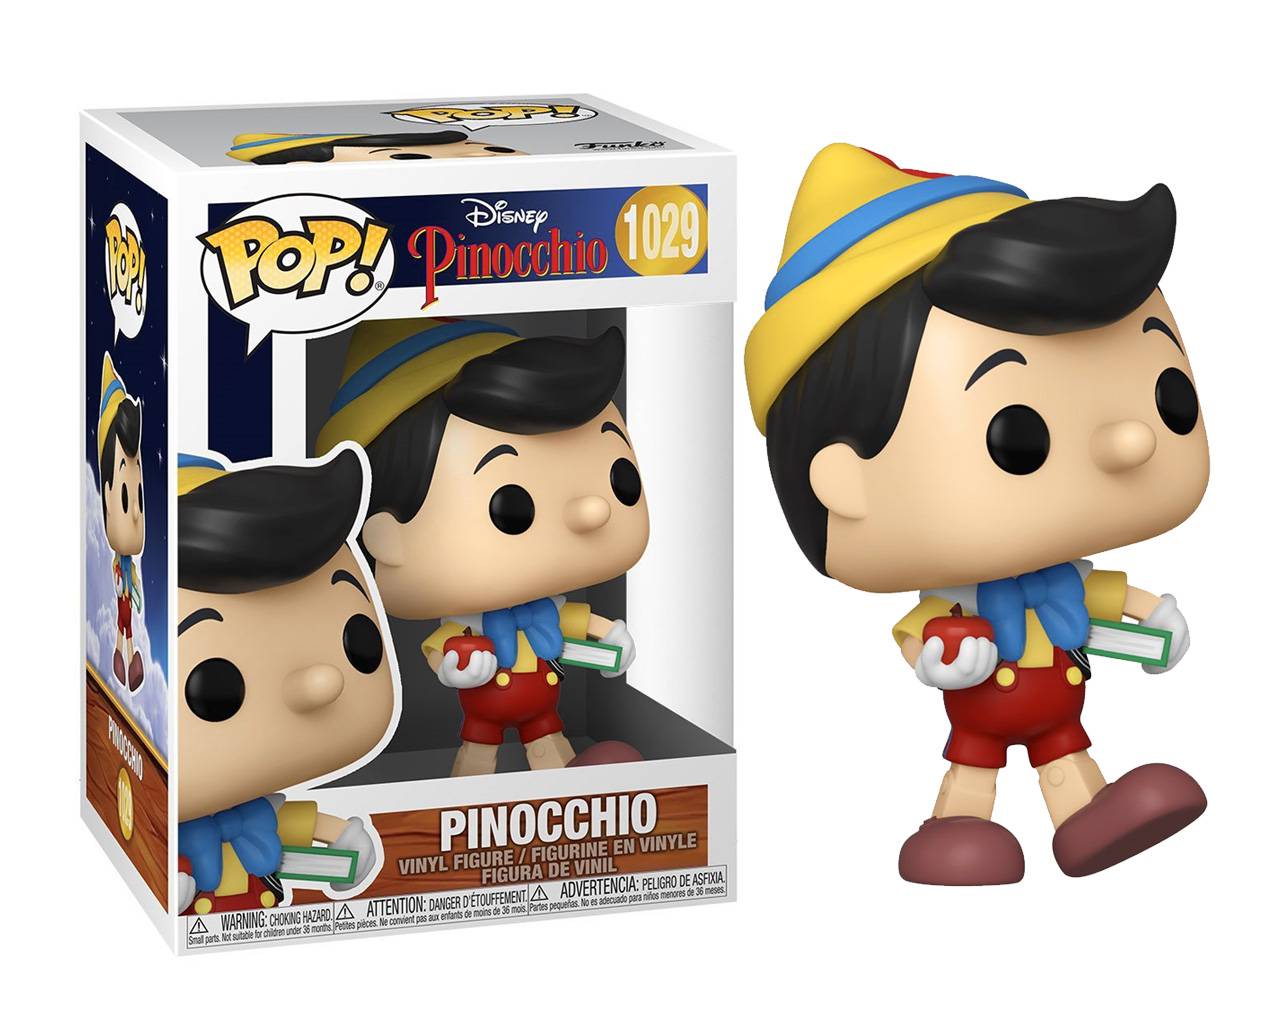 Pinocchio (School) Pop! Vinyl